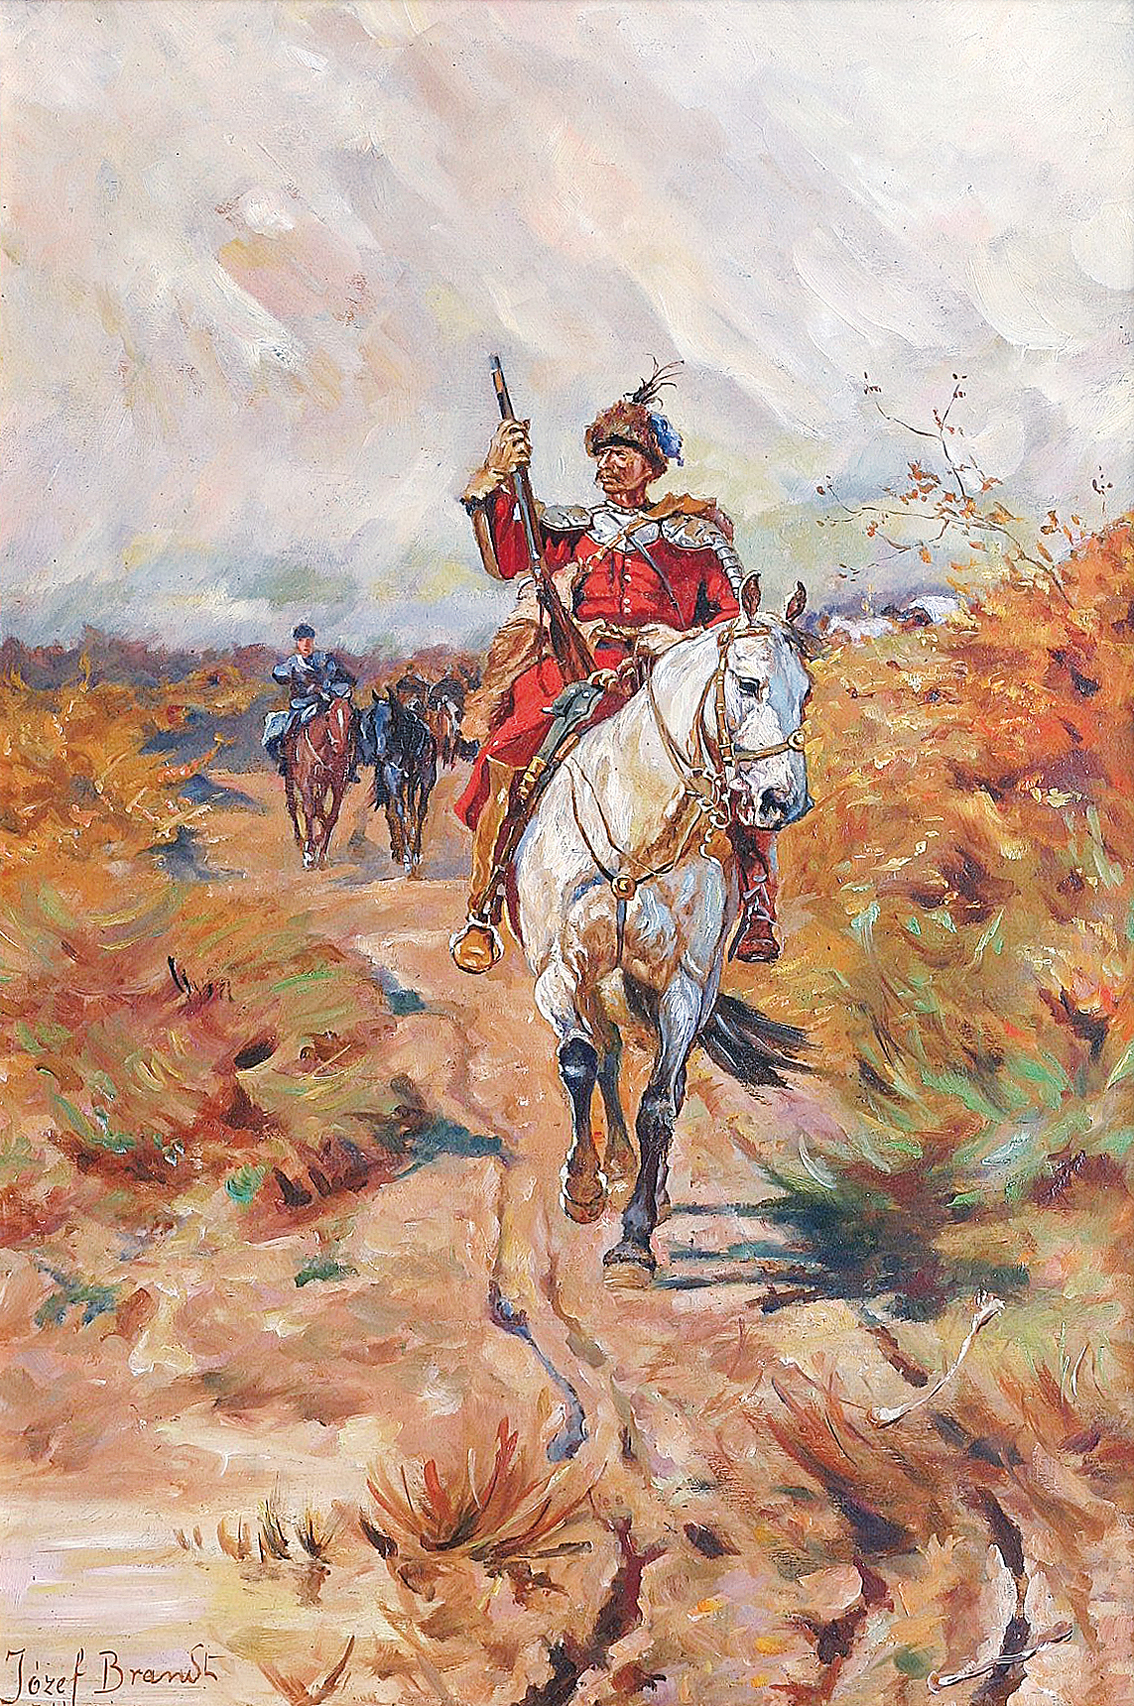 A Cossack general on horseback in a wild landscape